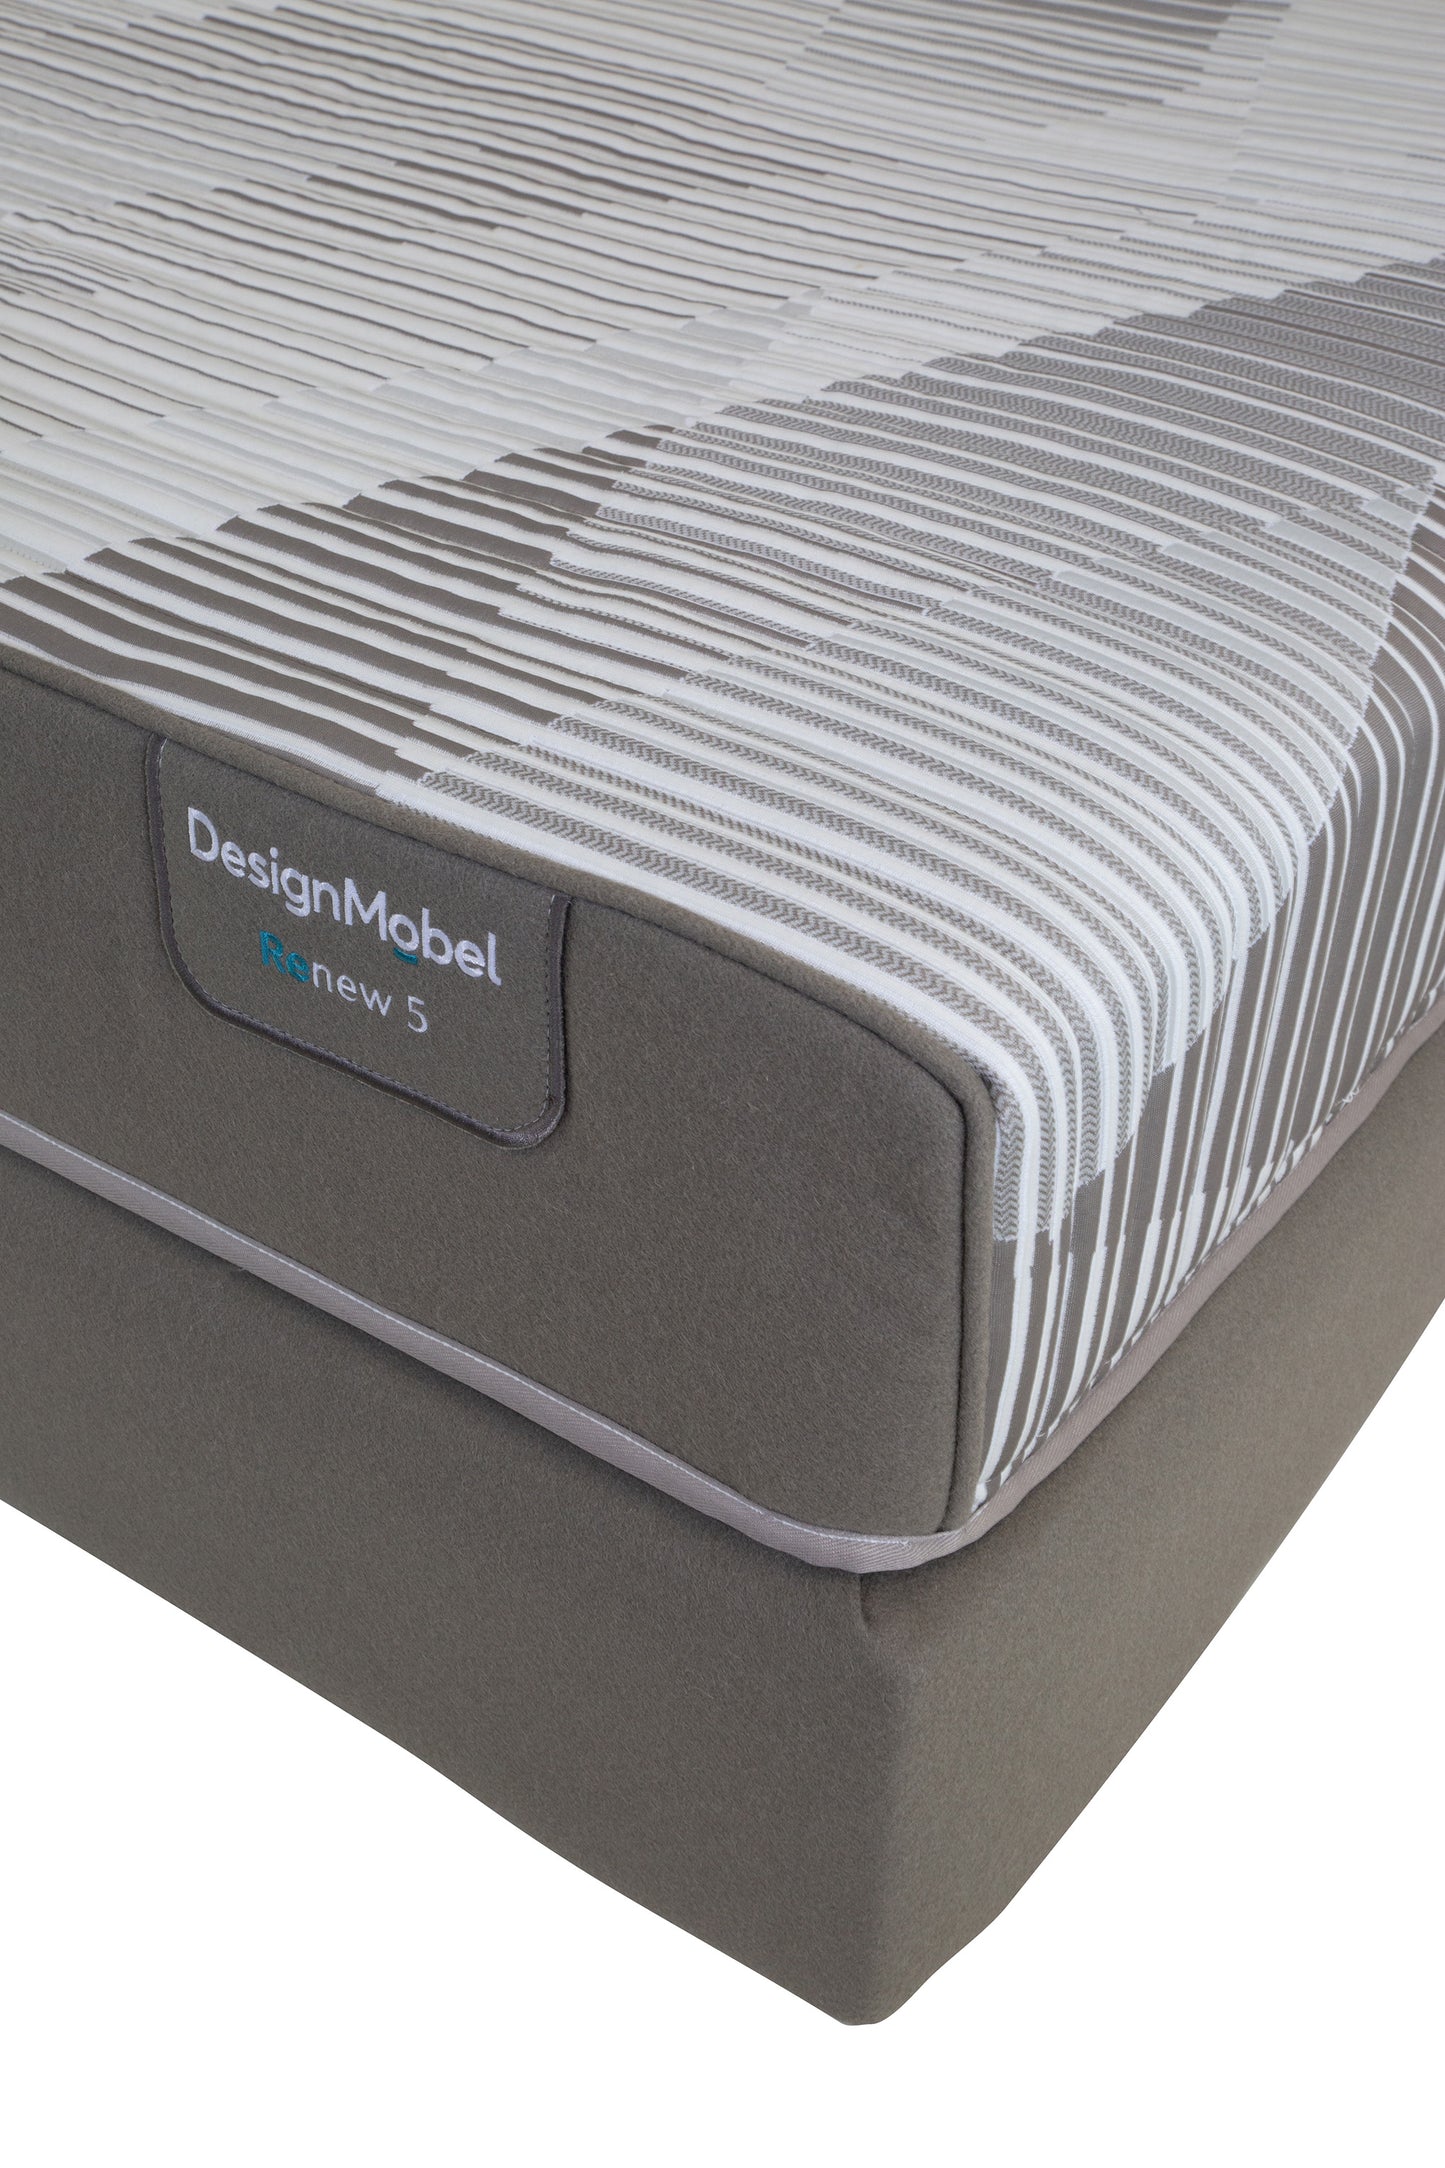 renew5-king-single-mattress-3